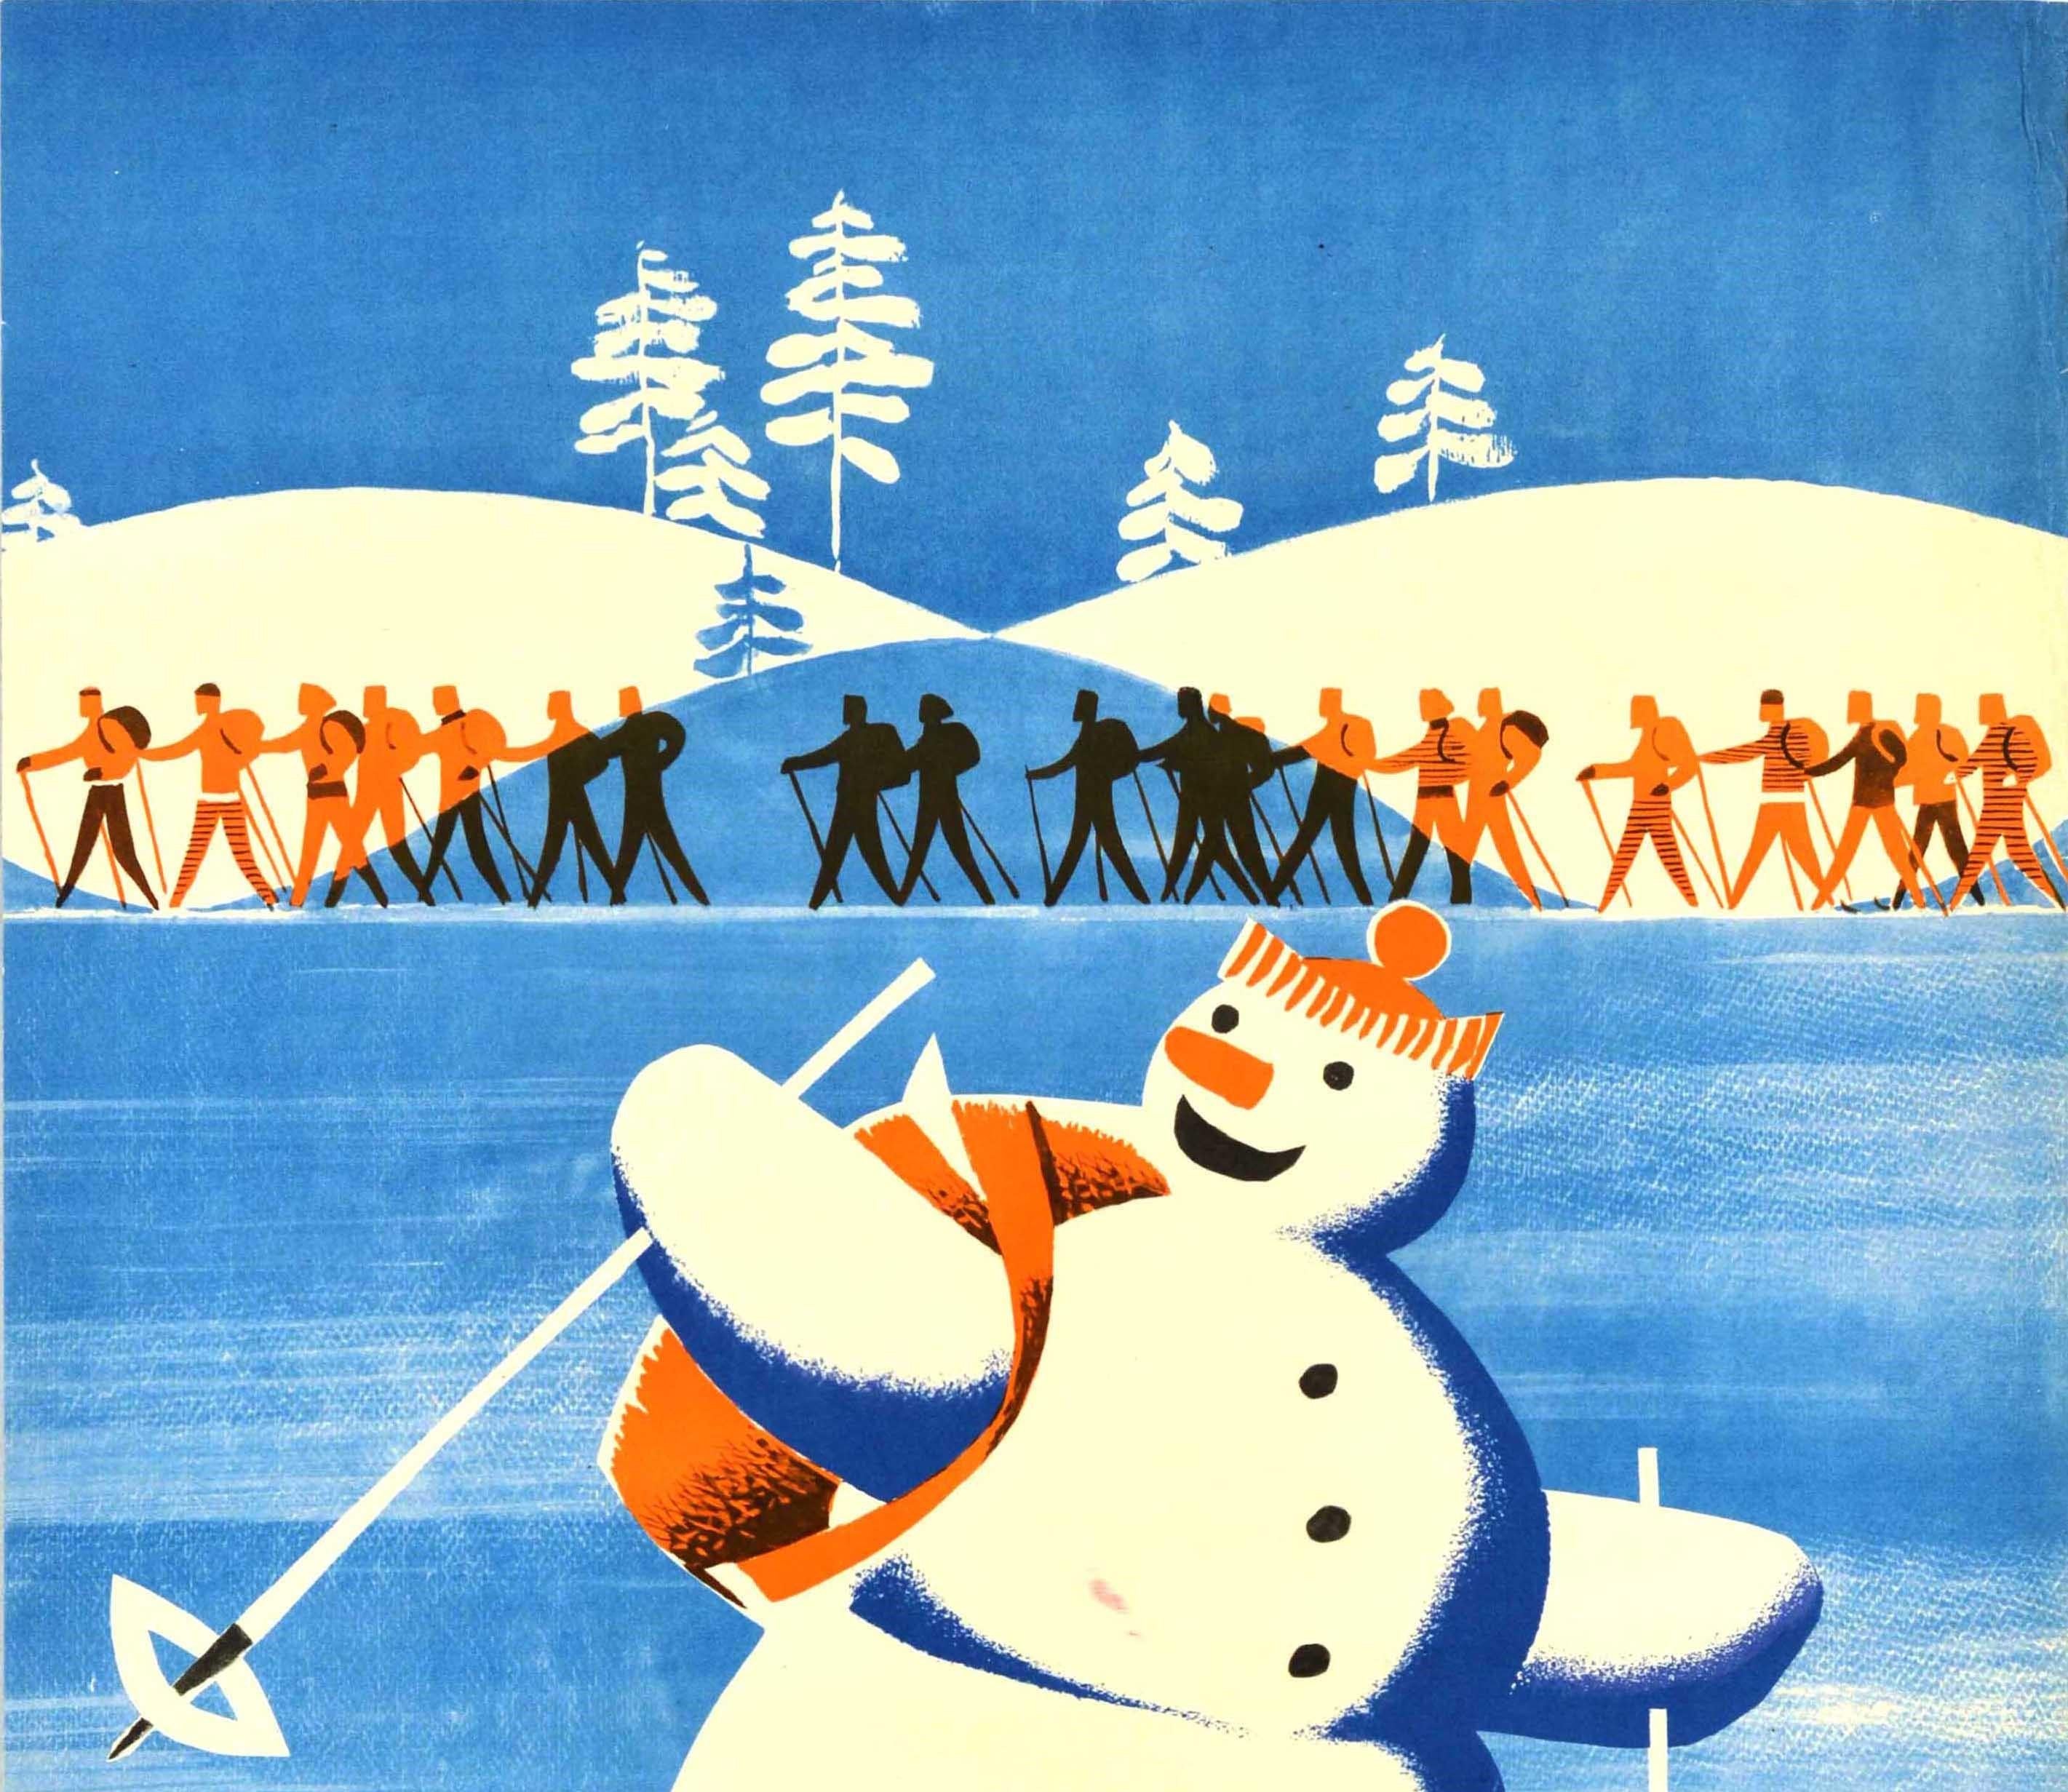 Original Vintage Winter Sport Poster Ski Tourists Snowman Cross-Country Skiers - Blue Print by Berzinsh